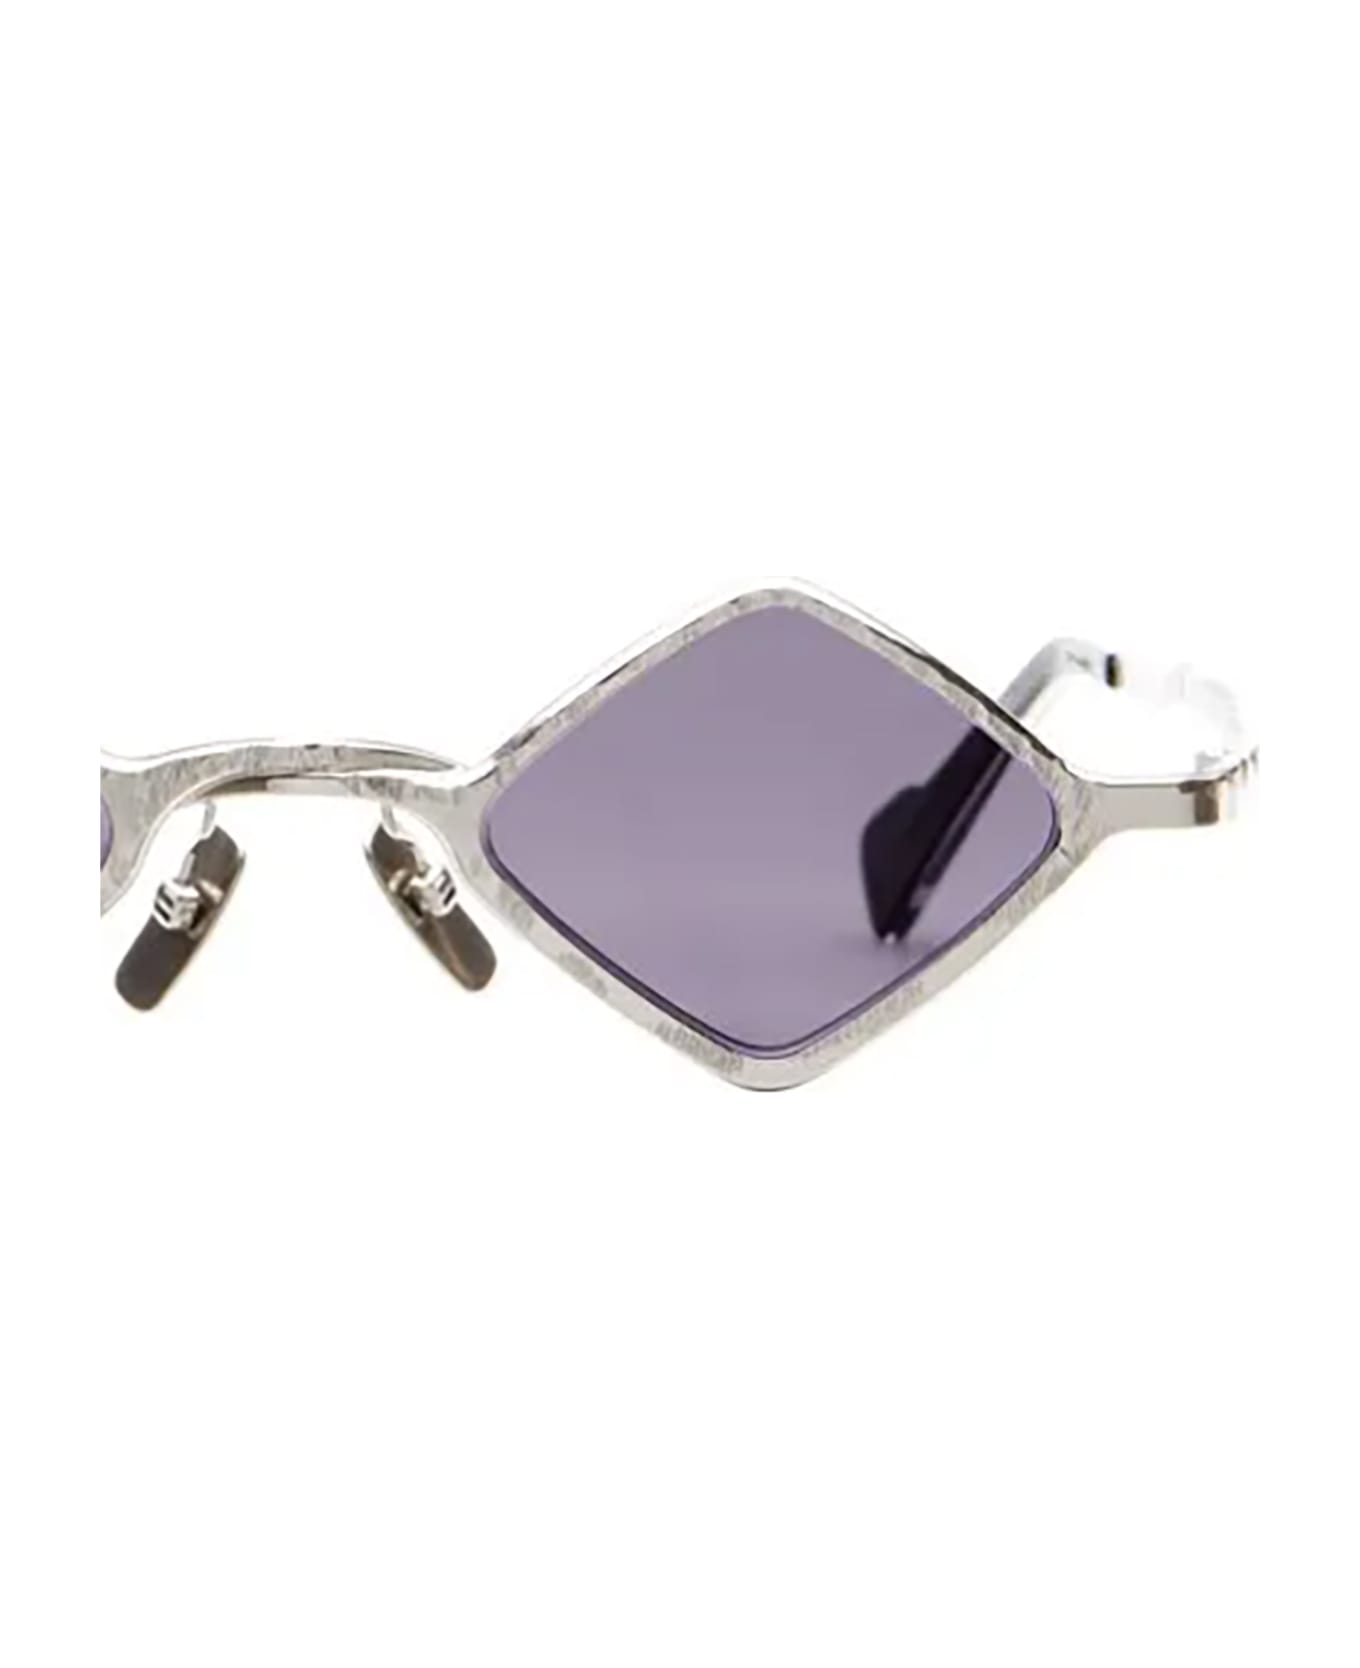 Kuboraum Z14 Sunglasses - Siv Violet